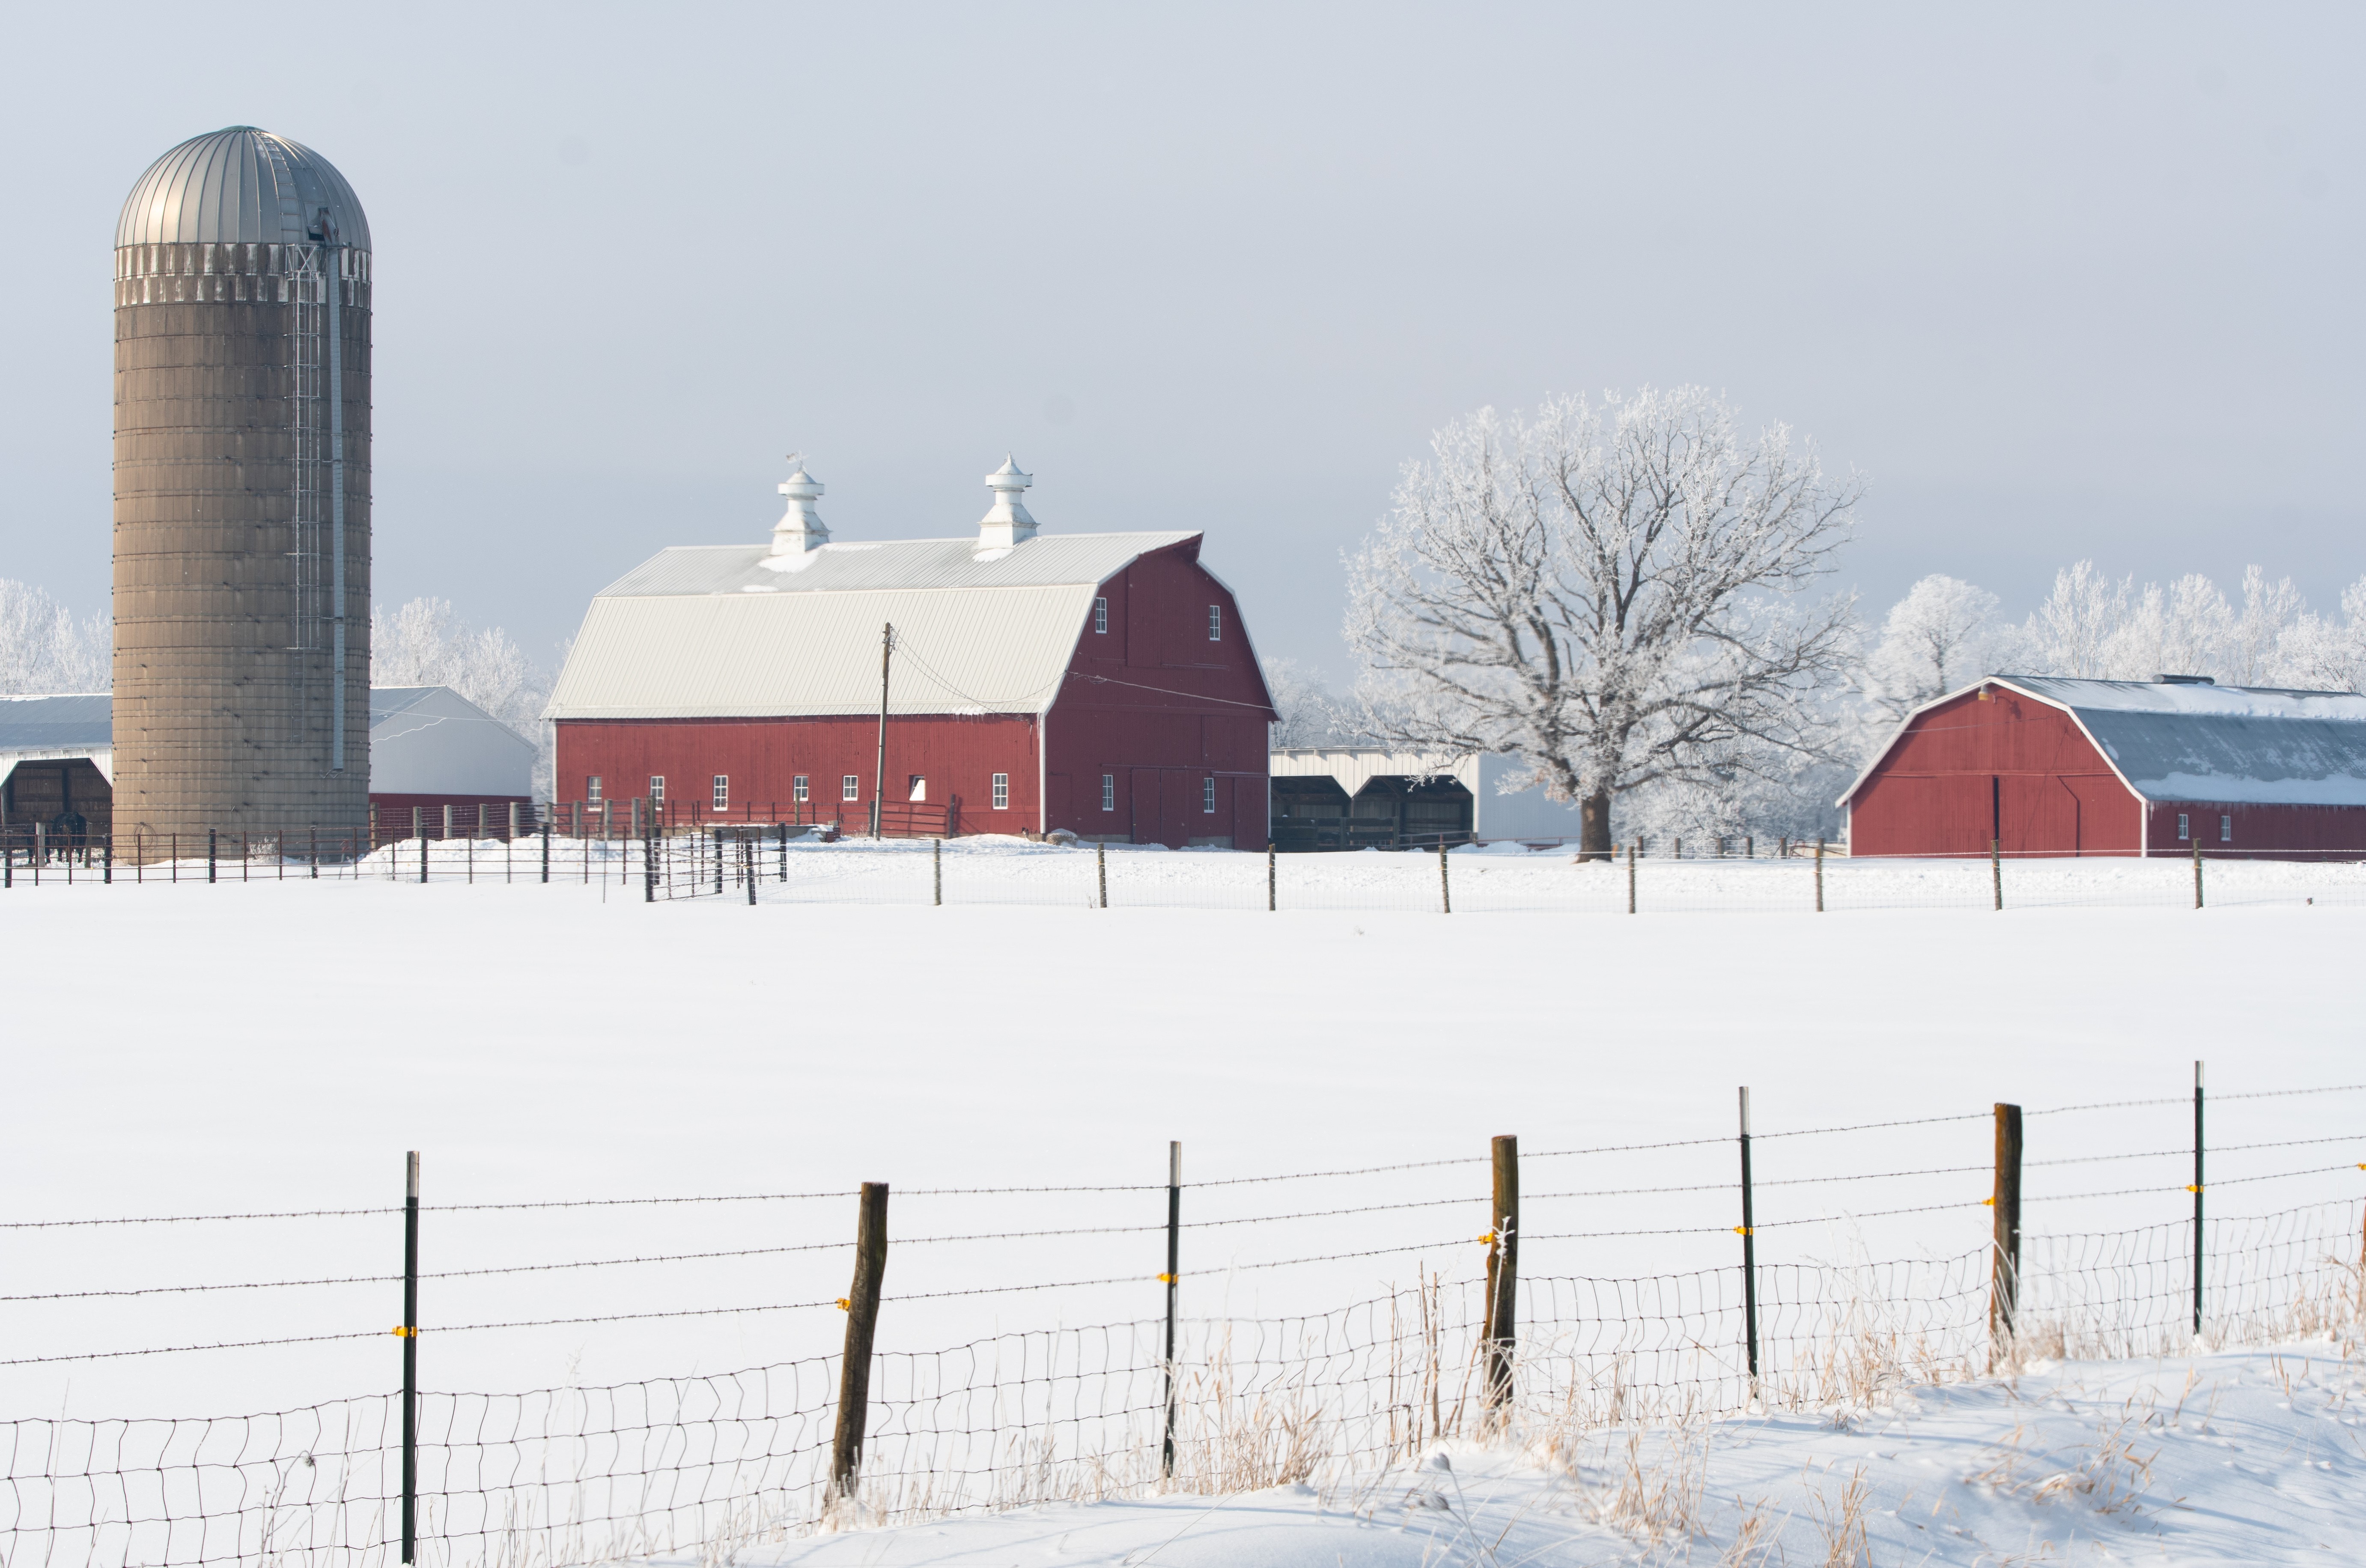 Snowy farmstead scene